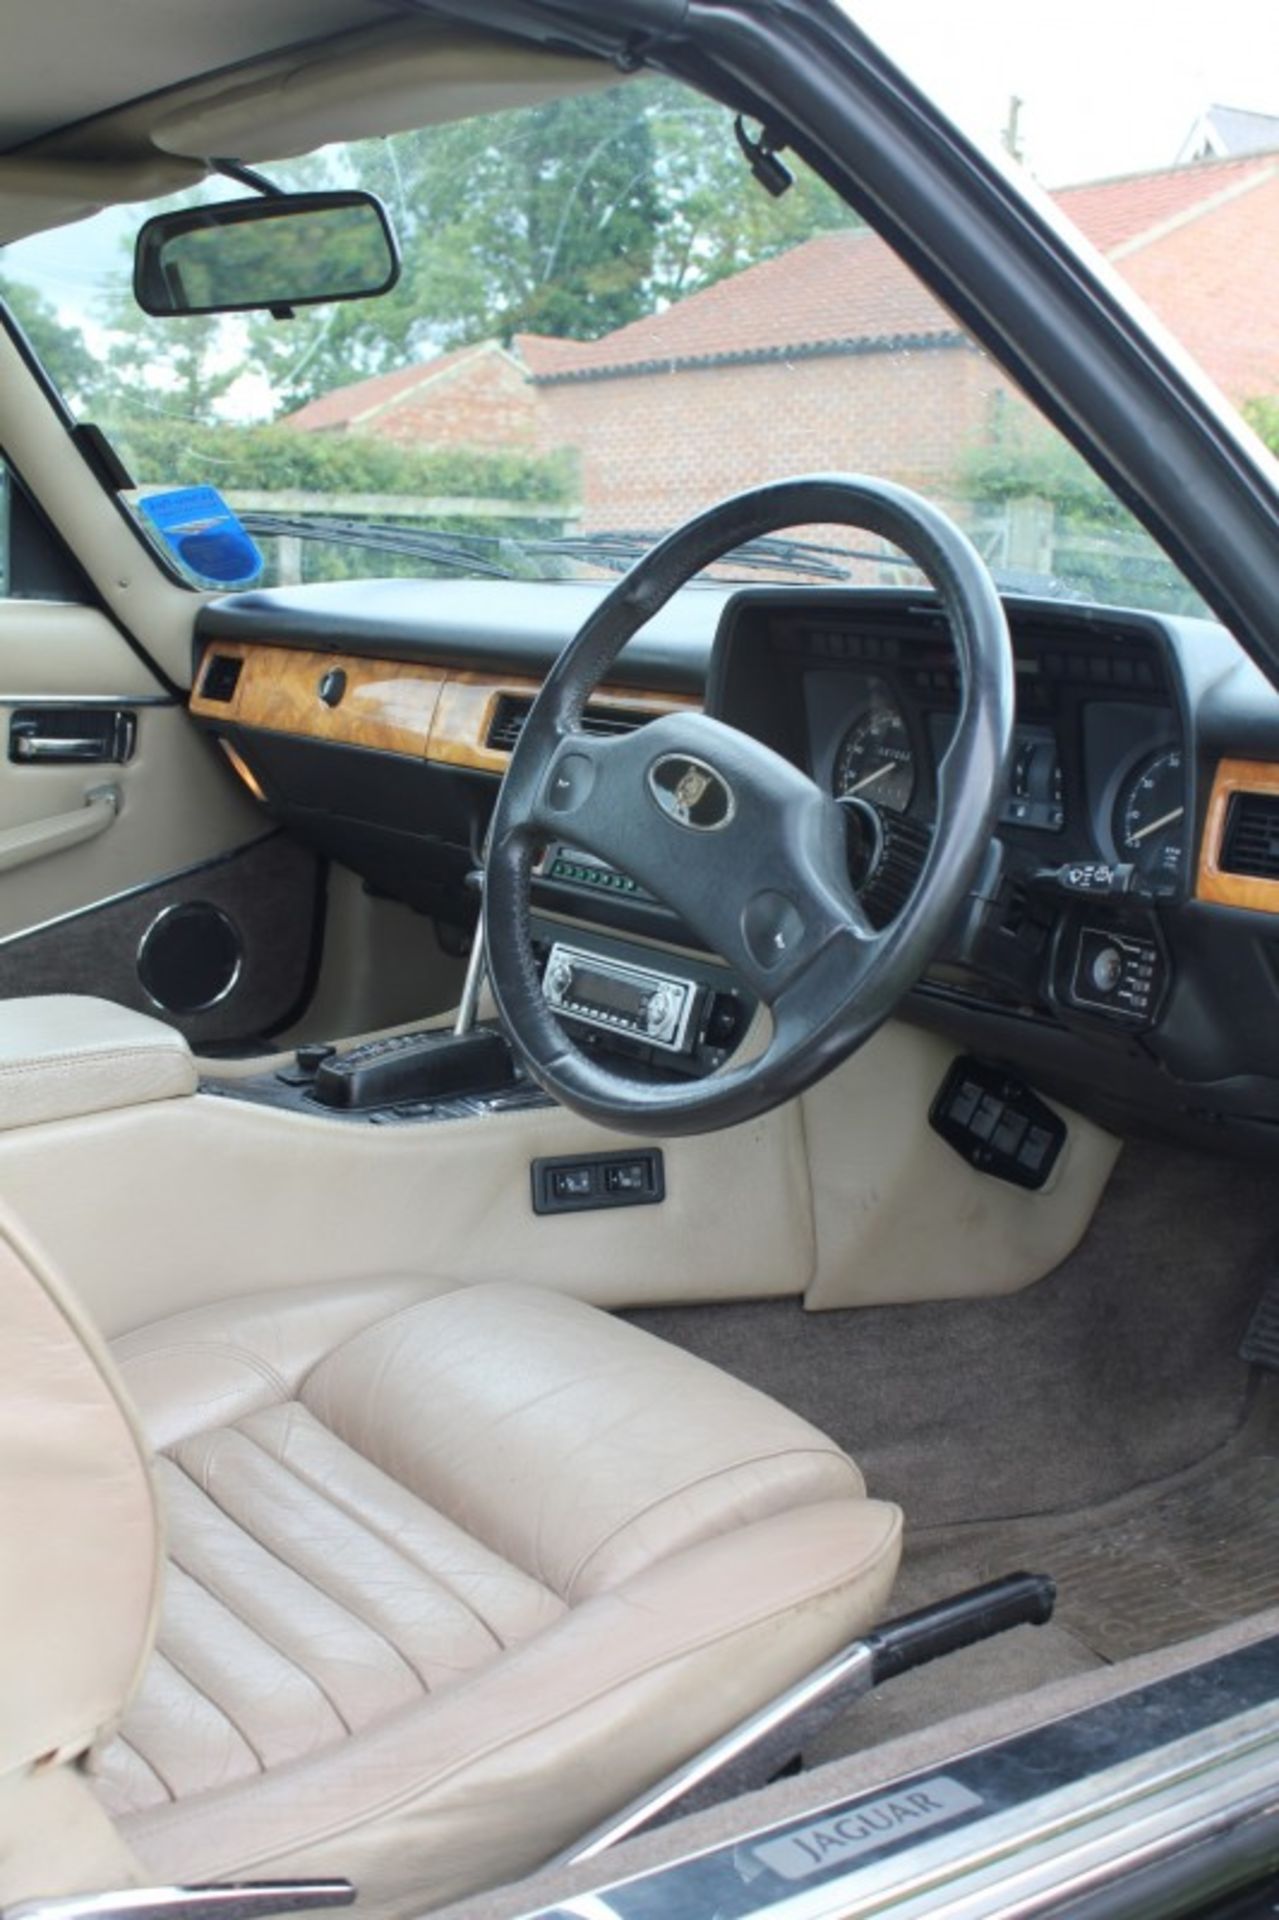 Jaguar XJS Convertible 1989 5.3 V12 - Image 6 of 8